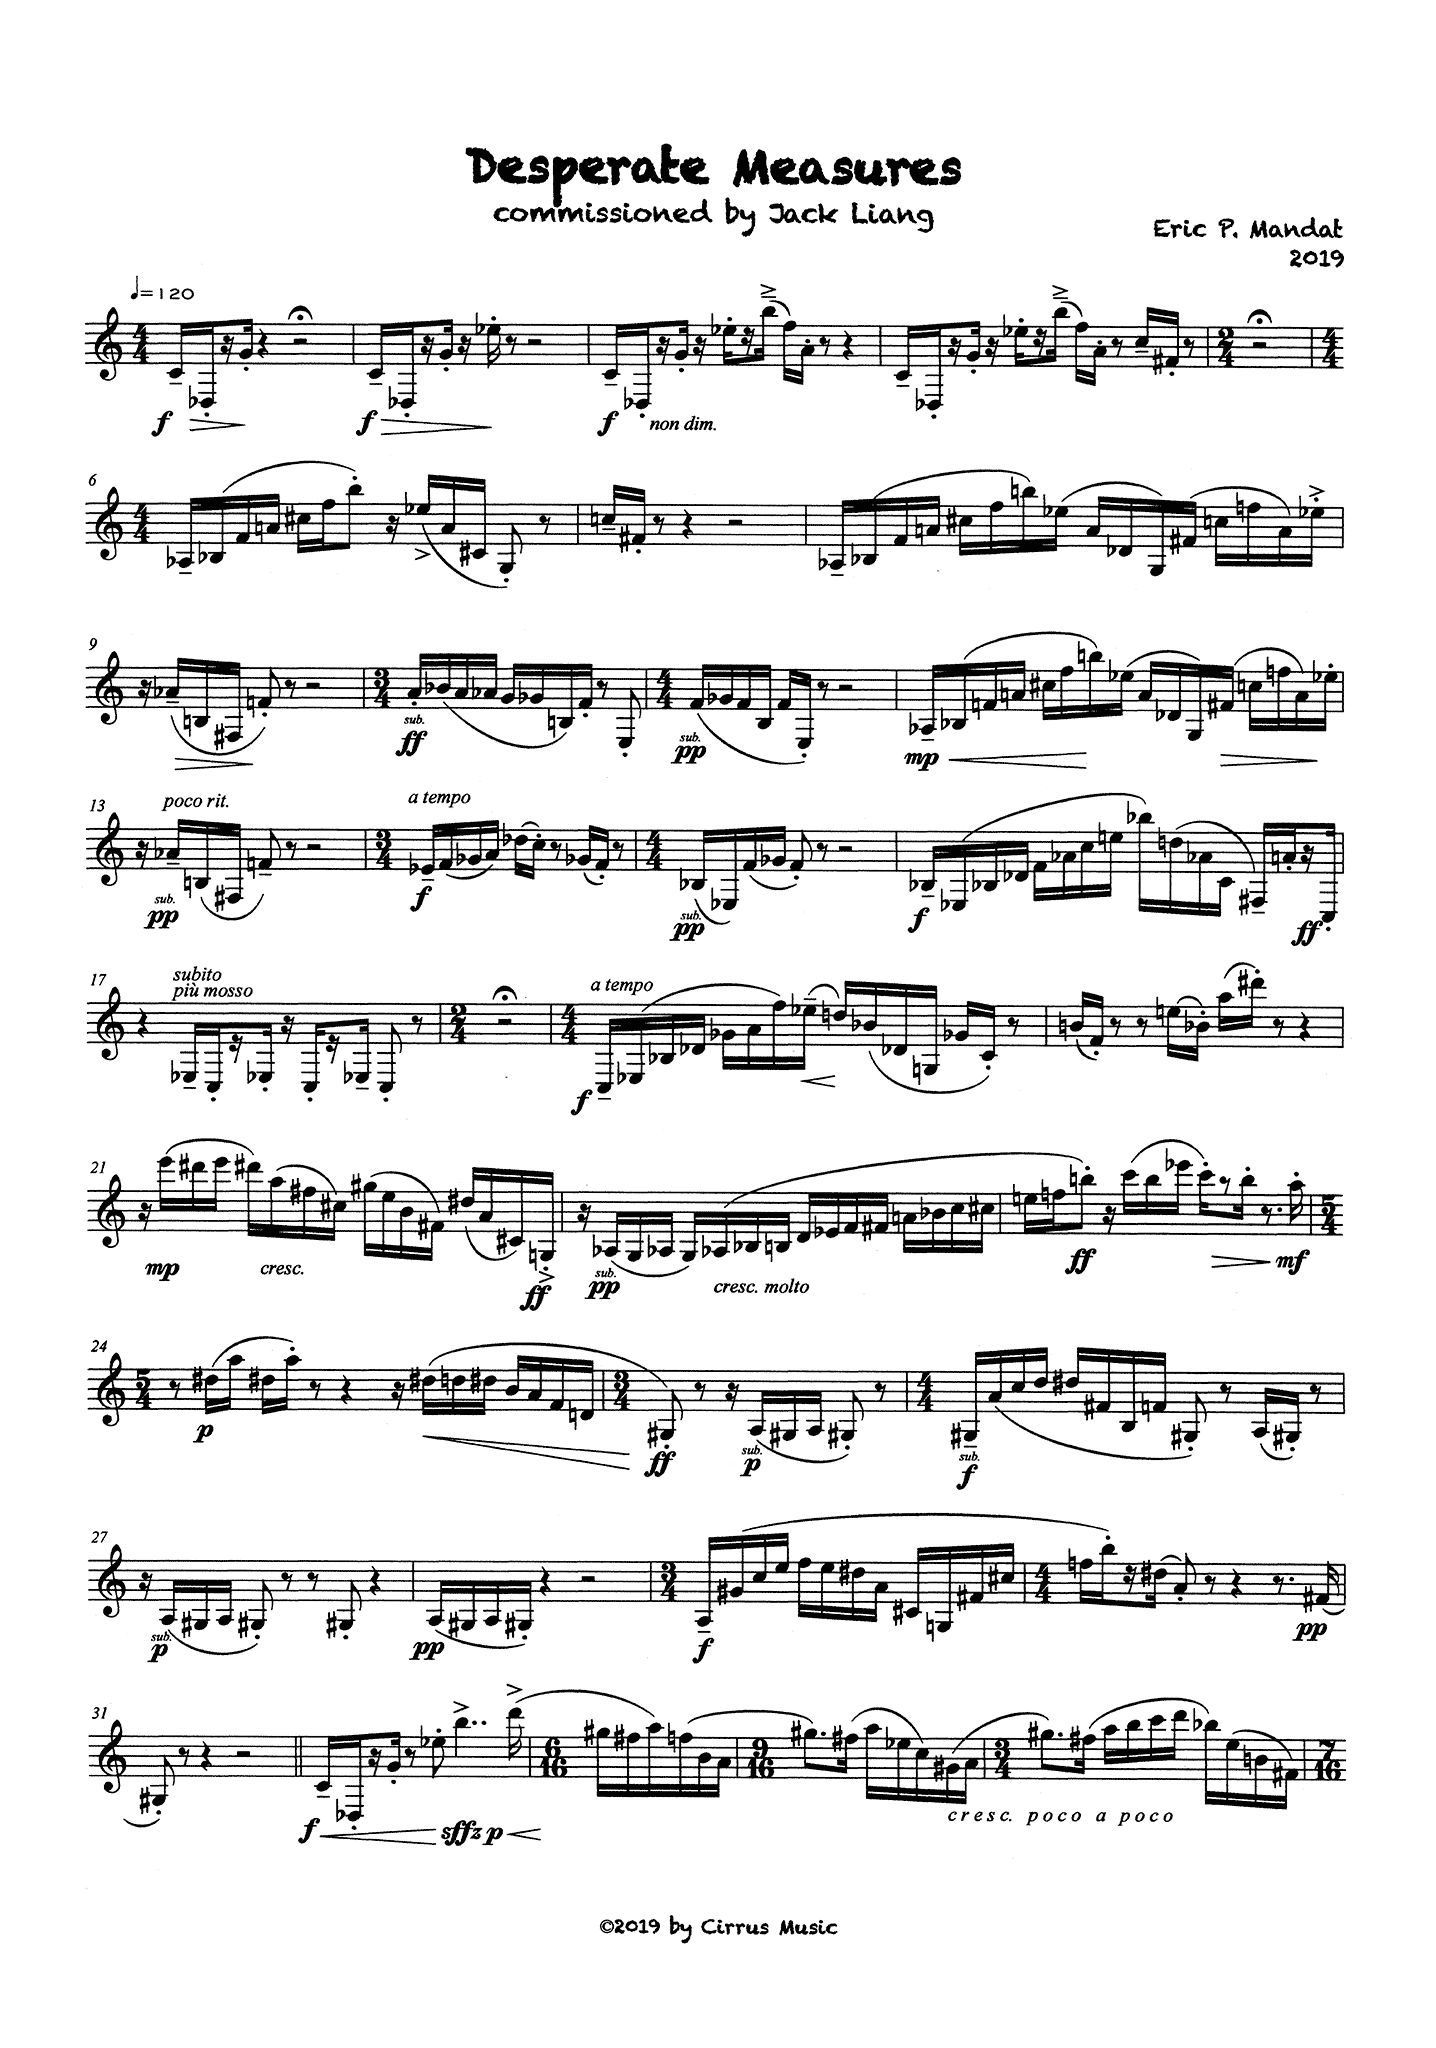 Eric Mandat Desperate Measures unaccompanied bass clarinet page 1